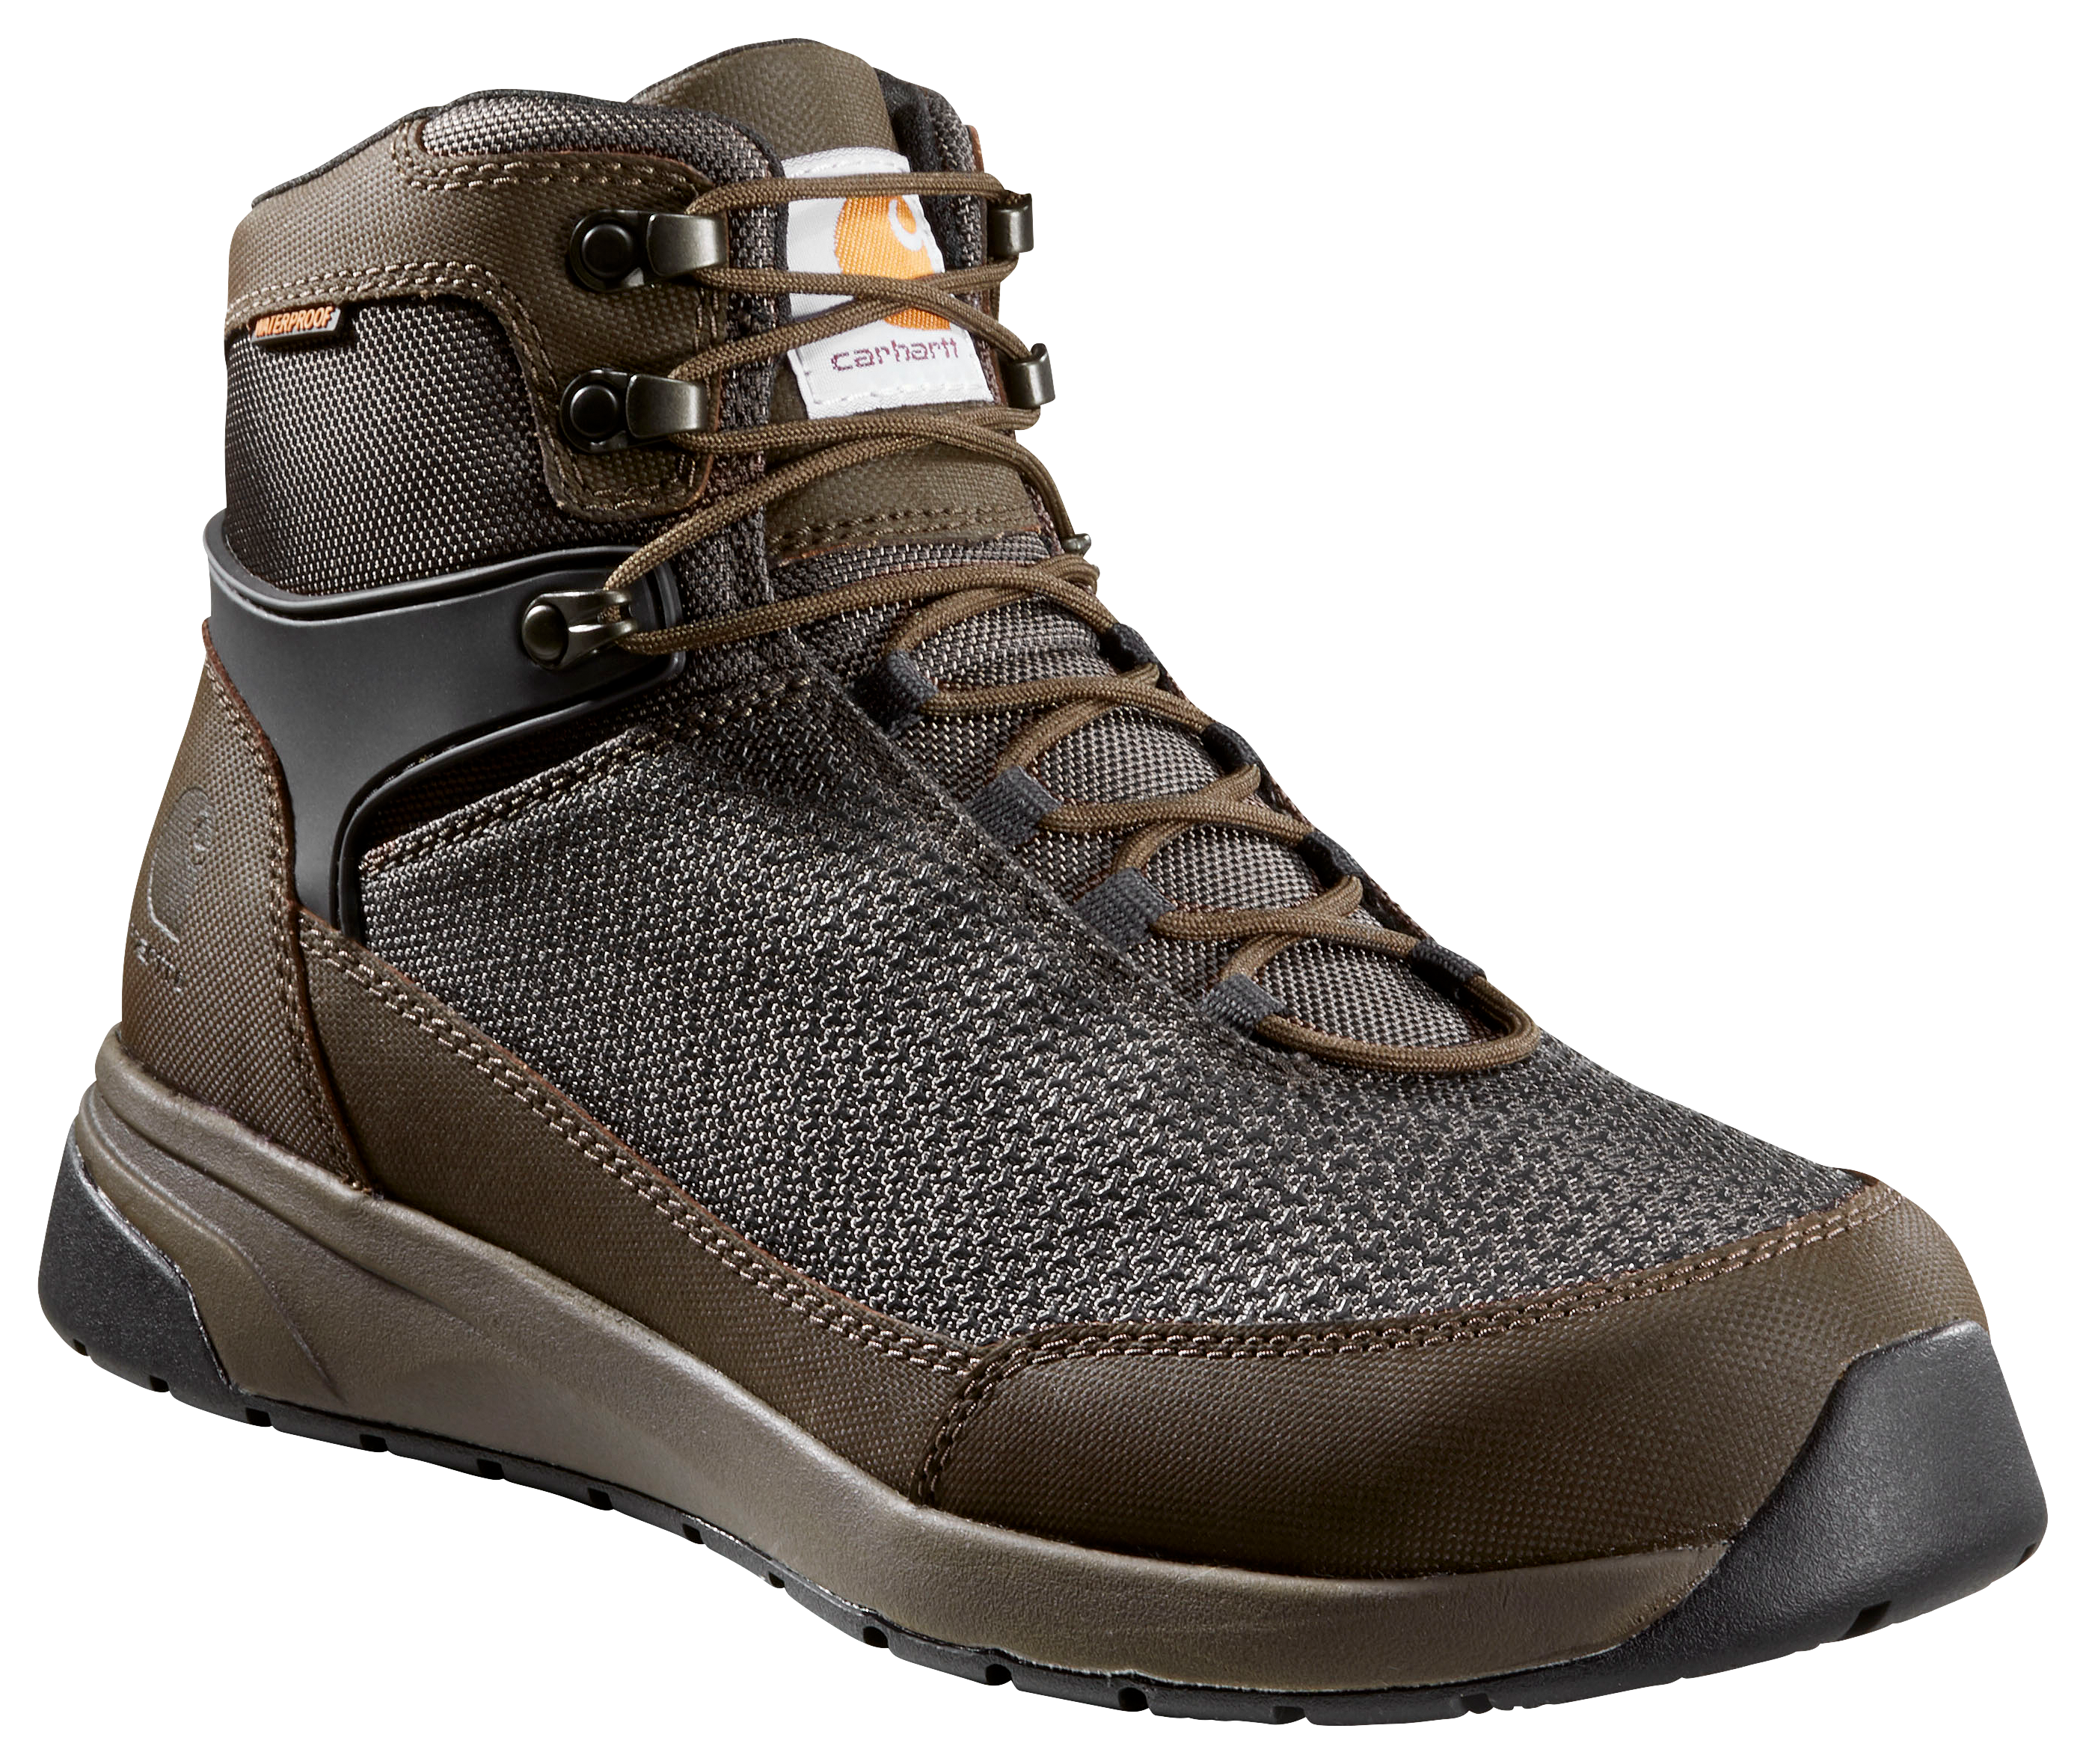 Carhartt Force 6"" Nano Composite-Toe Work Boots for Men - Espresso - 8M